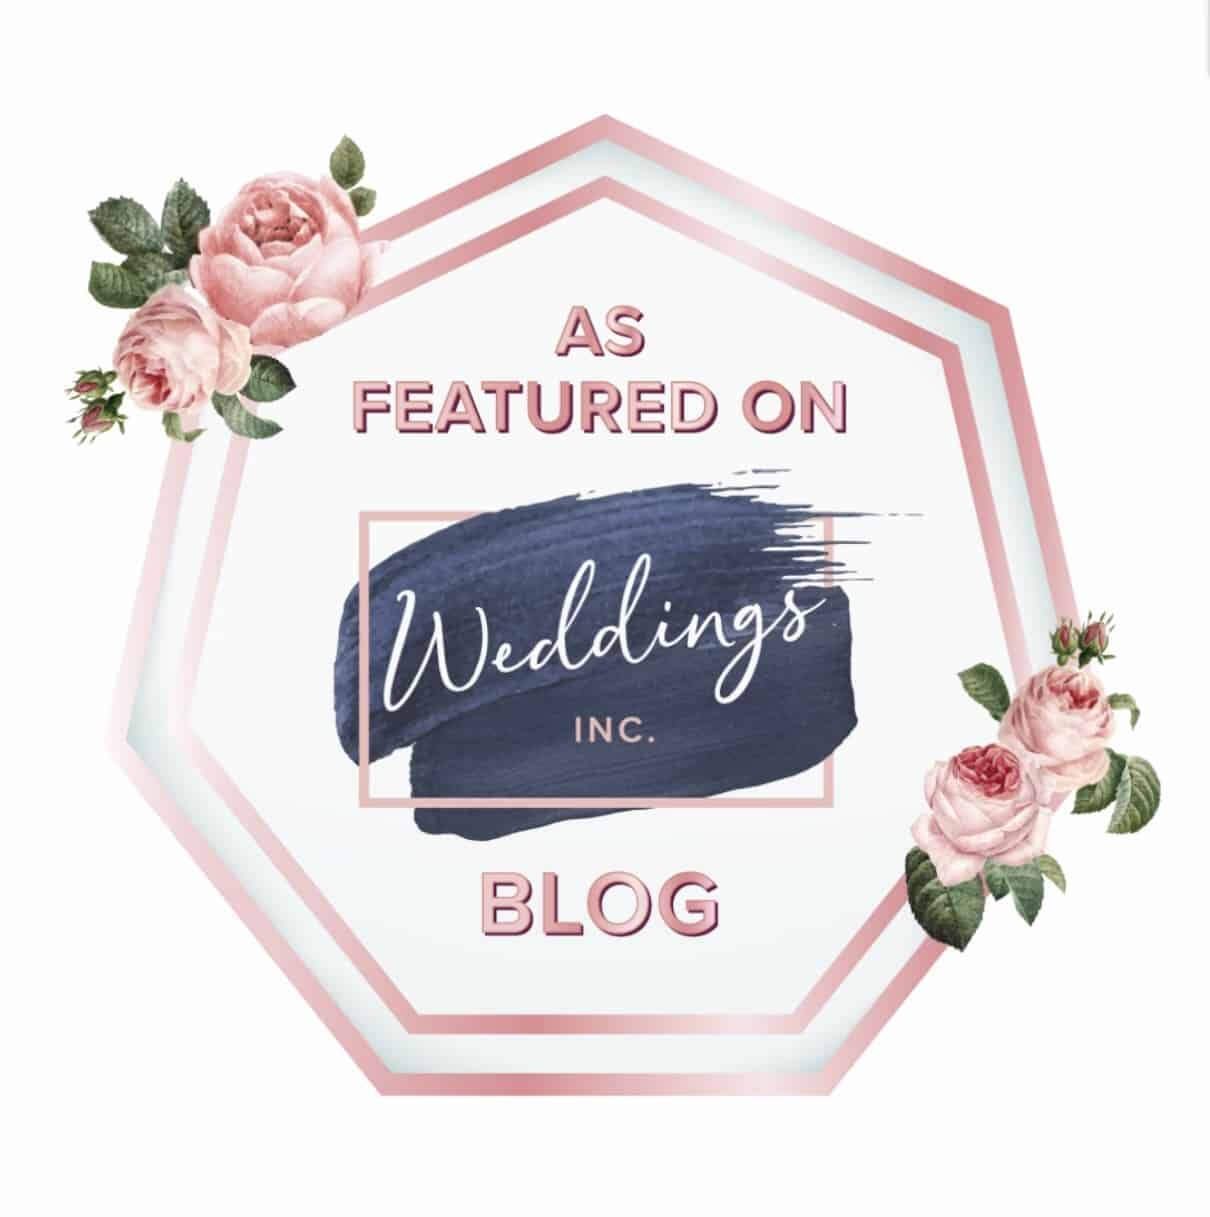 weddingsincblog